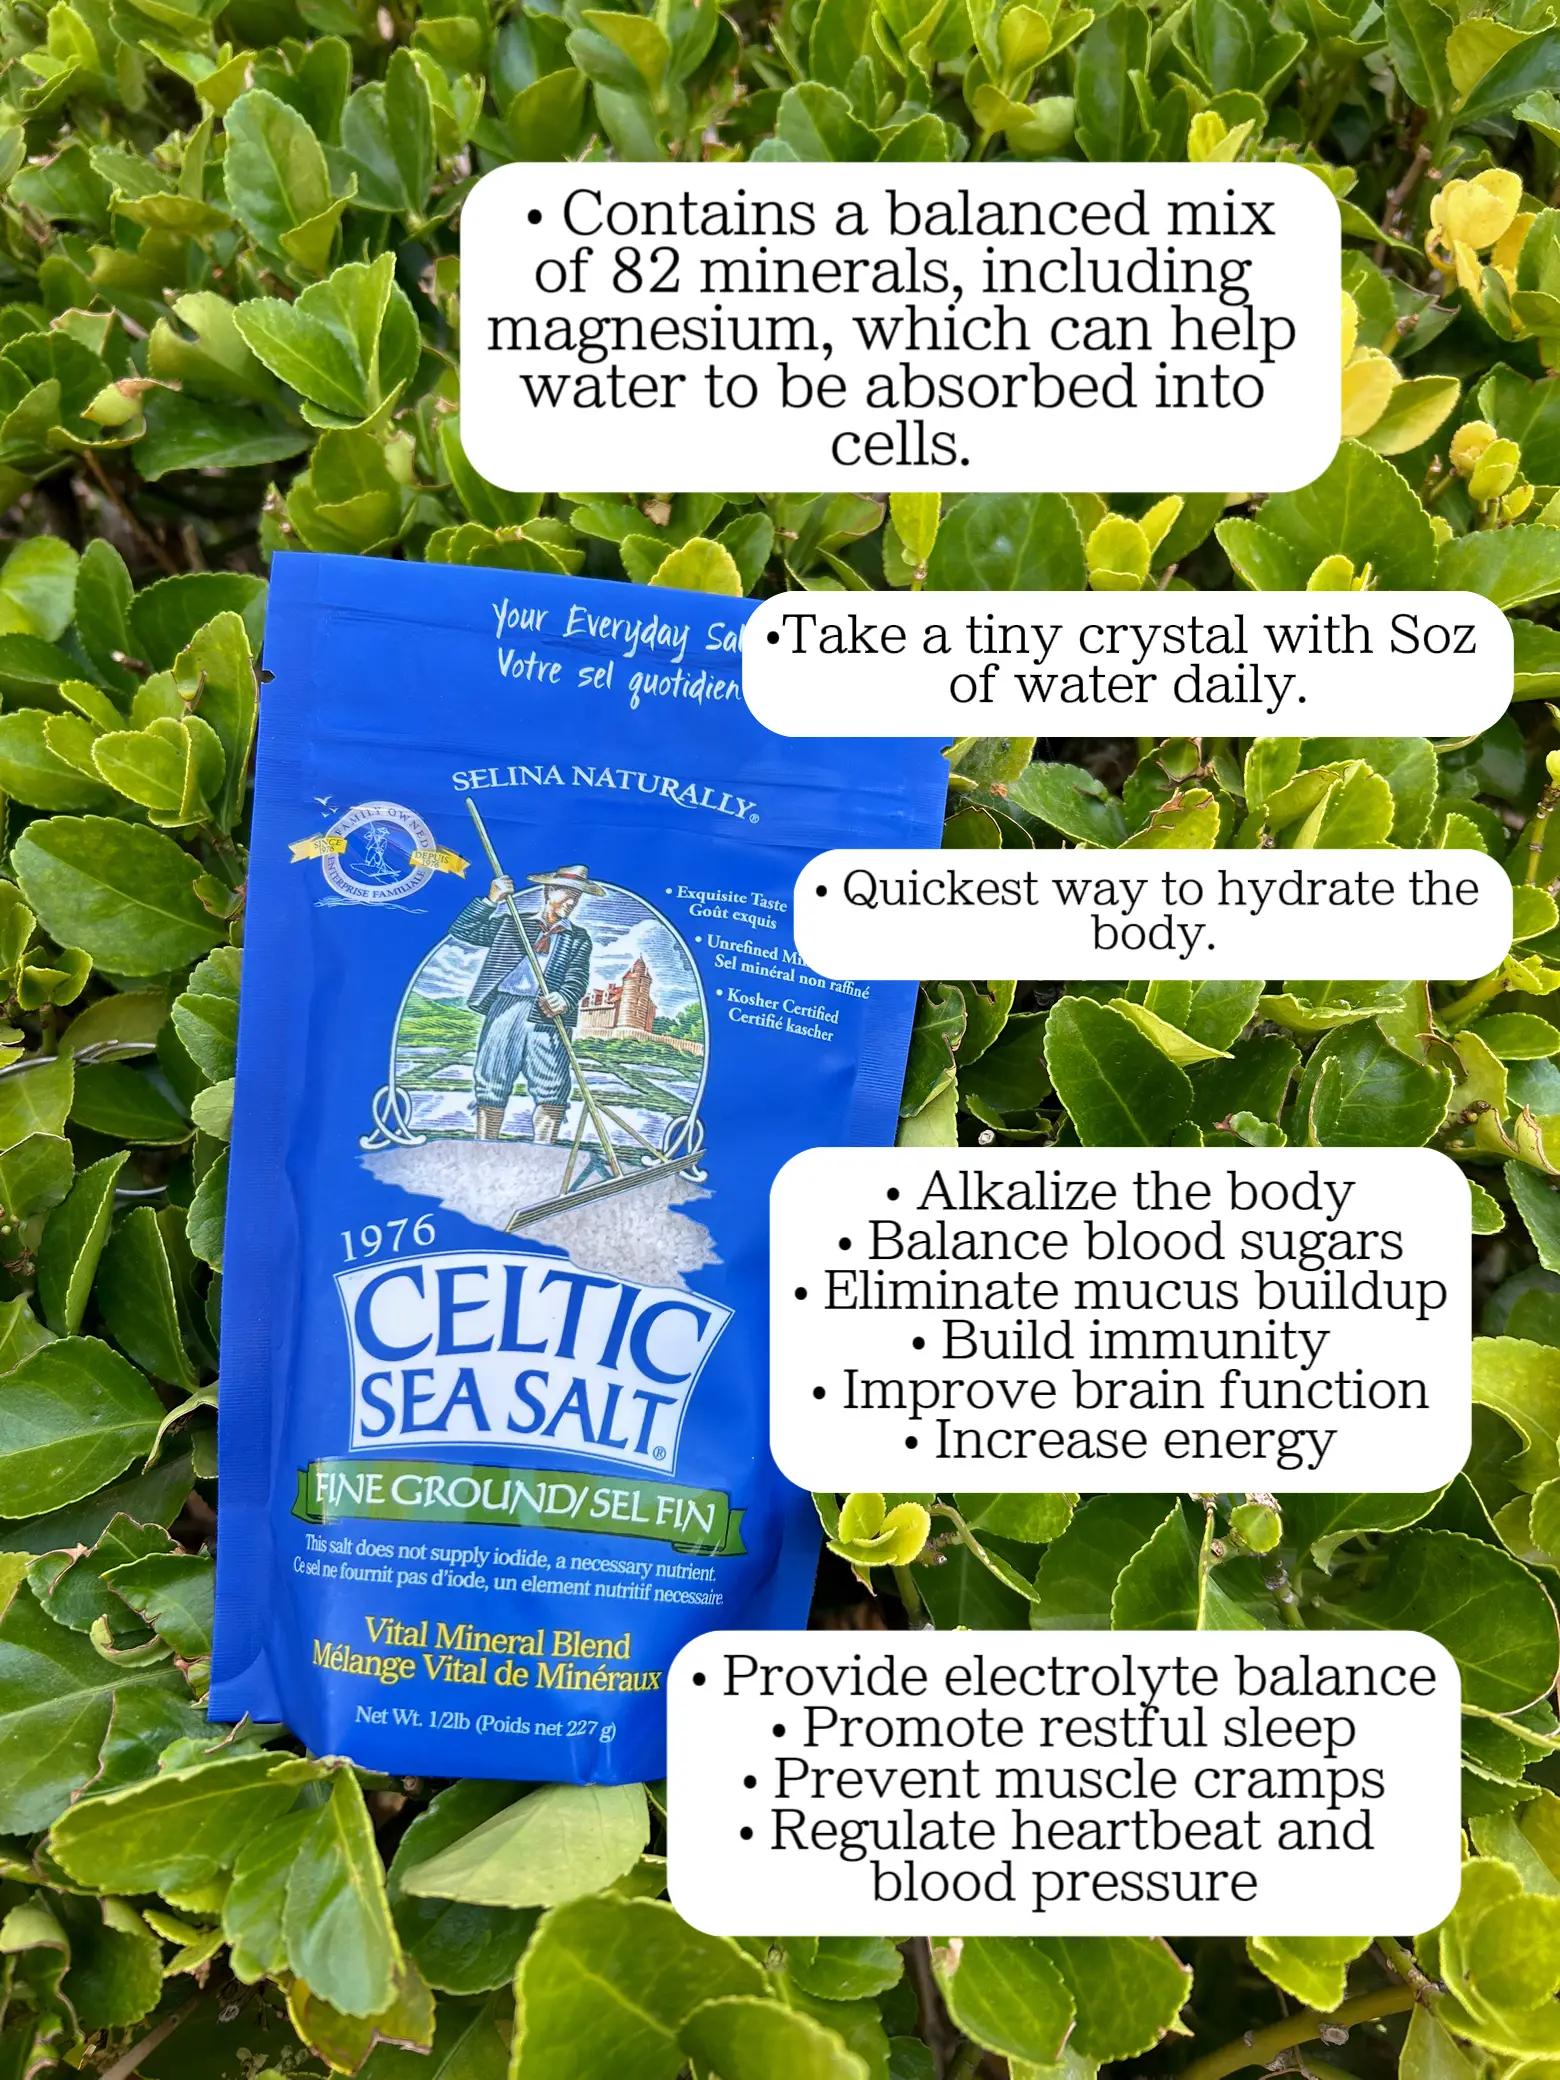 Selina Naturally Celtic Sea Salt Fine Ground Bagged, 0.5 lb